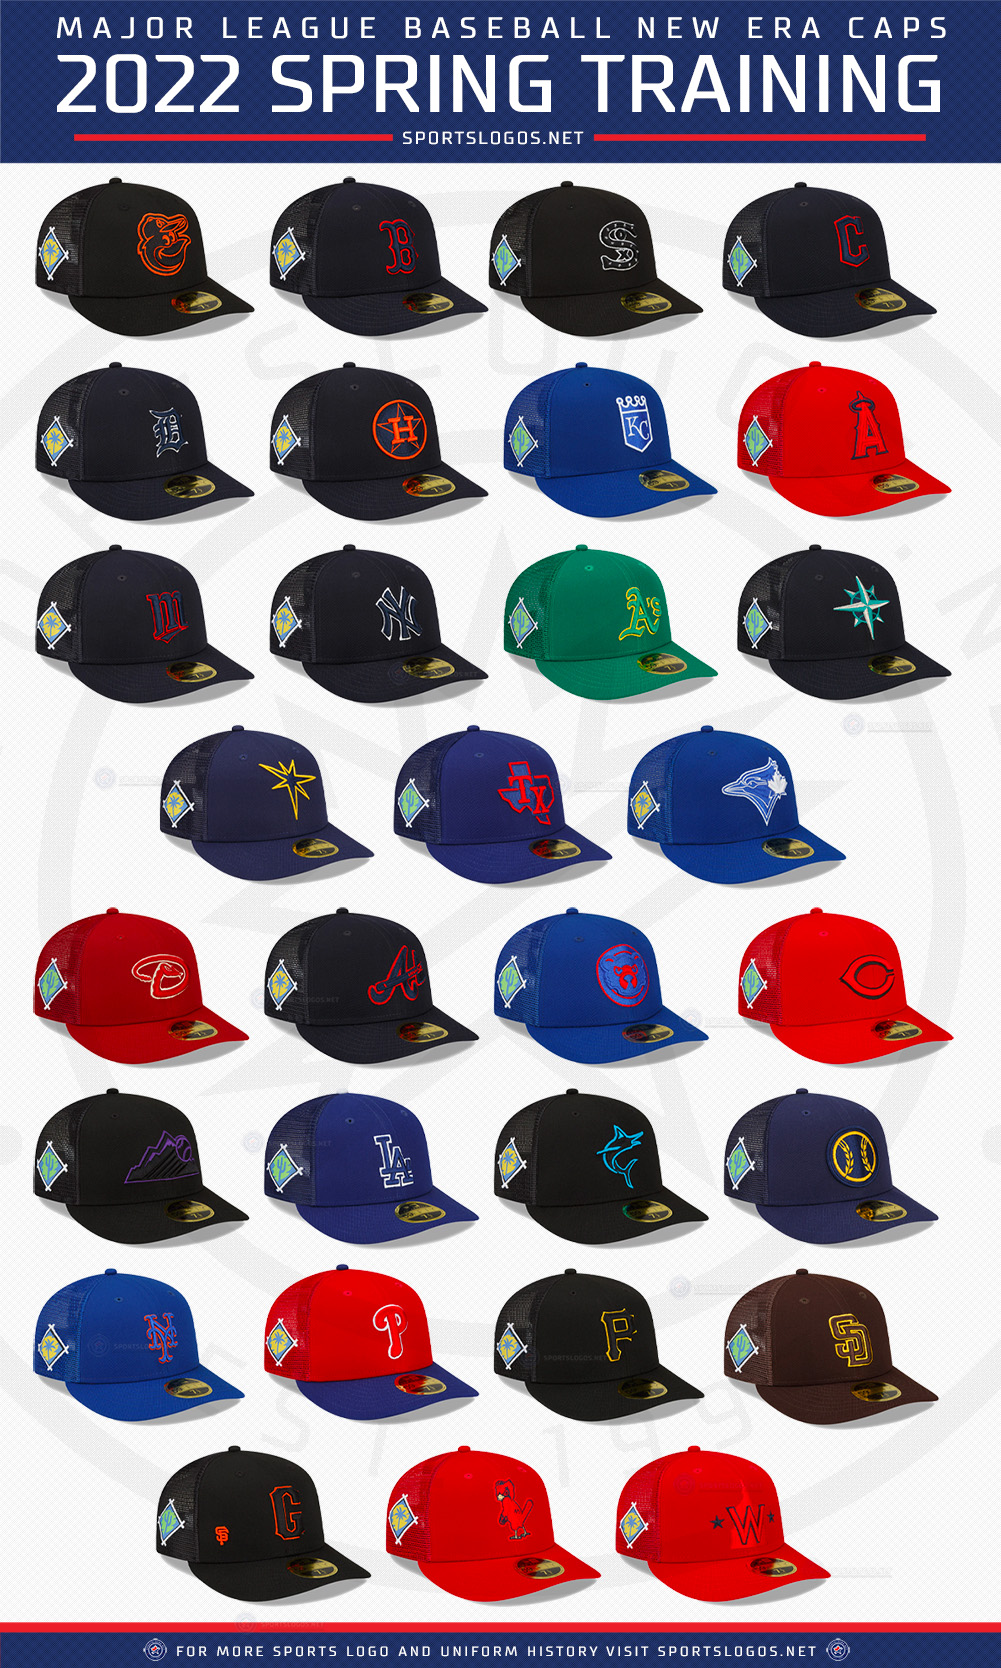 Major League Baseball’s 2022 Spring Training Caps Released